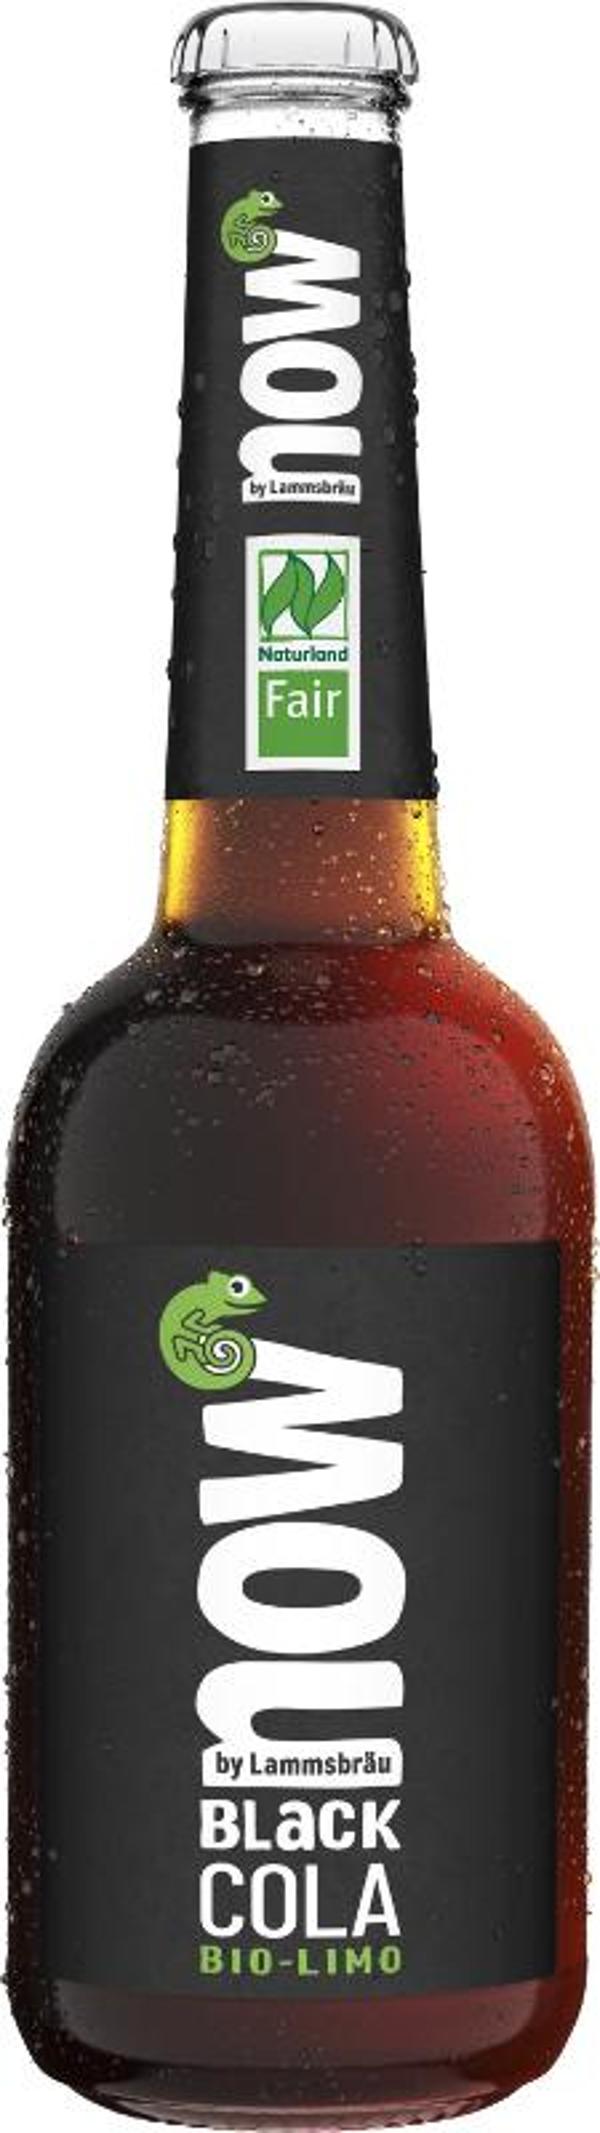 Produktfoto zu Kiste now Black Cola 10*0,33l